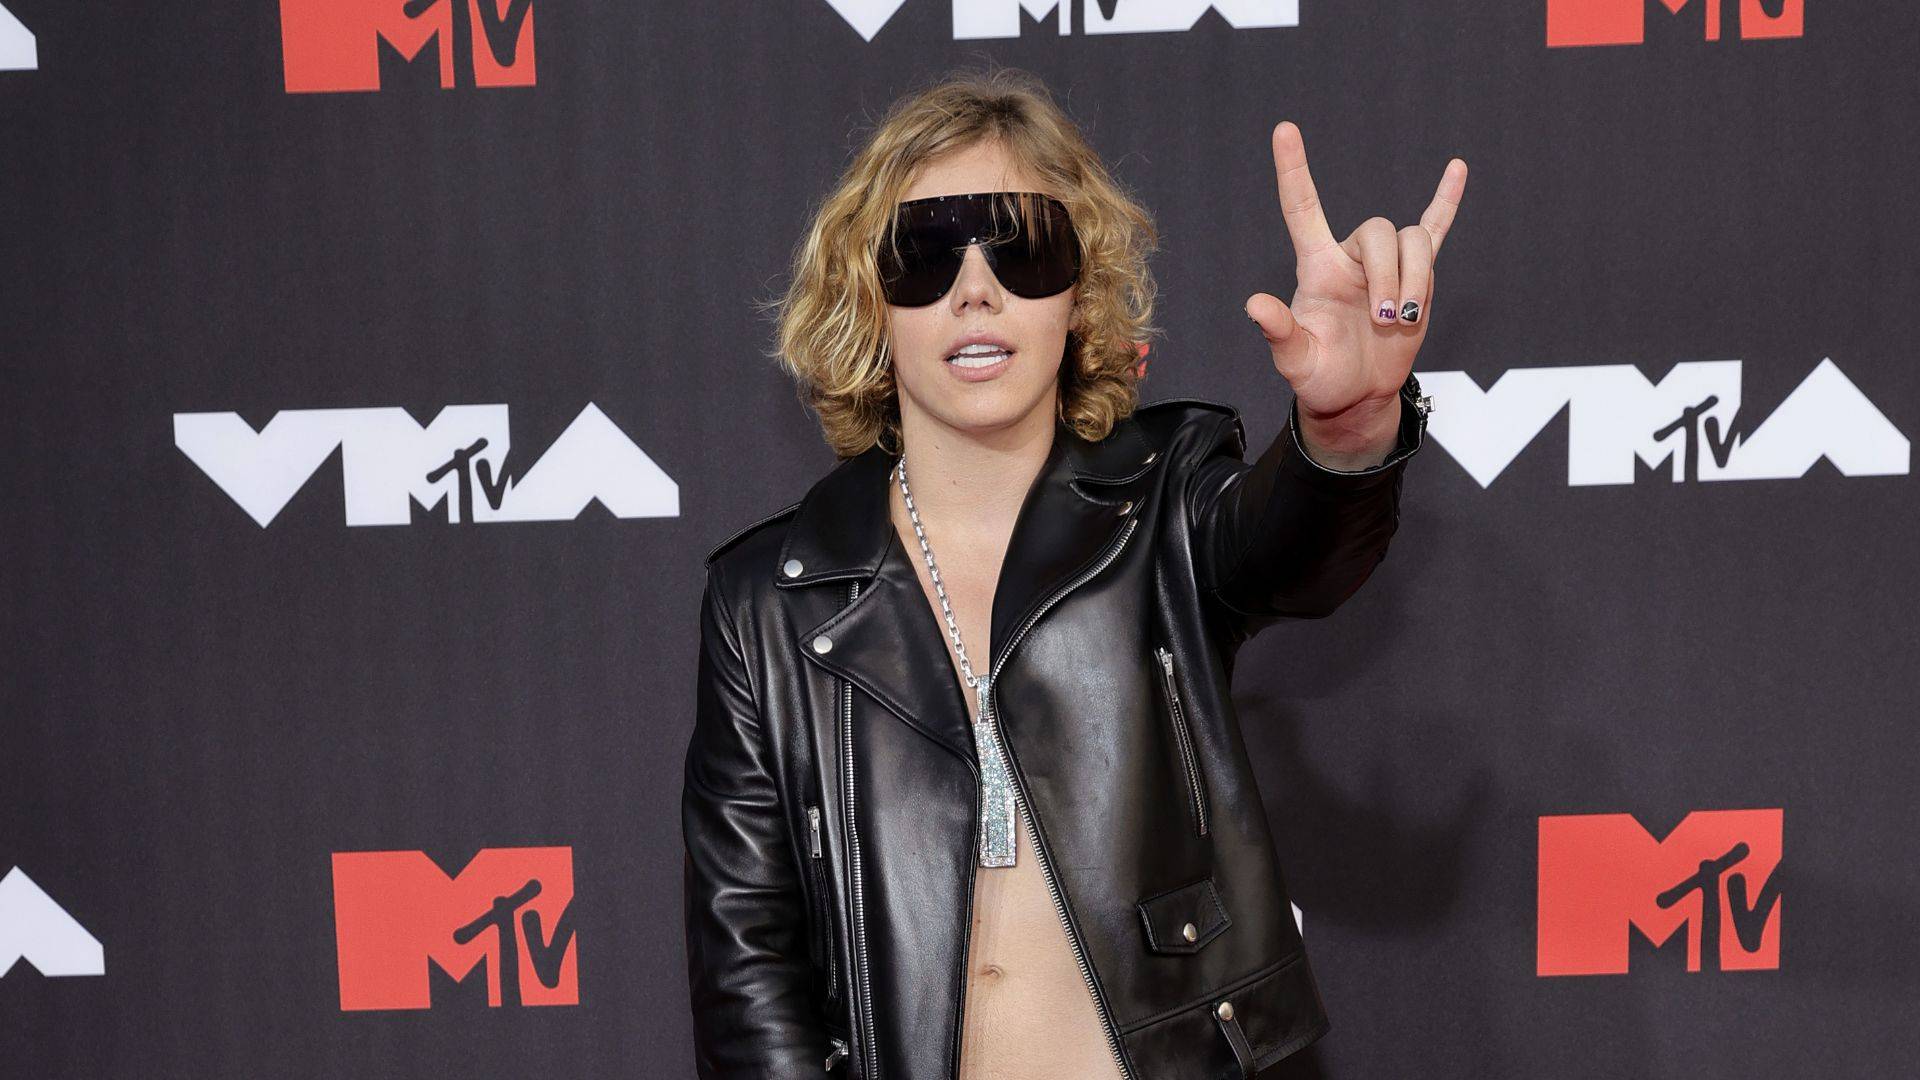 THe Kid LAROI at MTV VMAs red carpet 2021 hands up